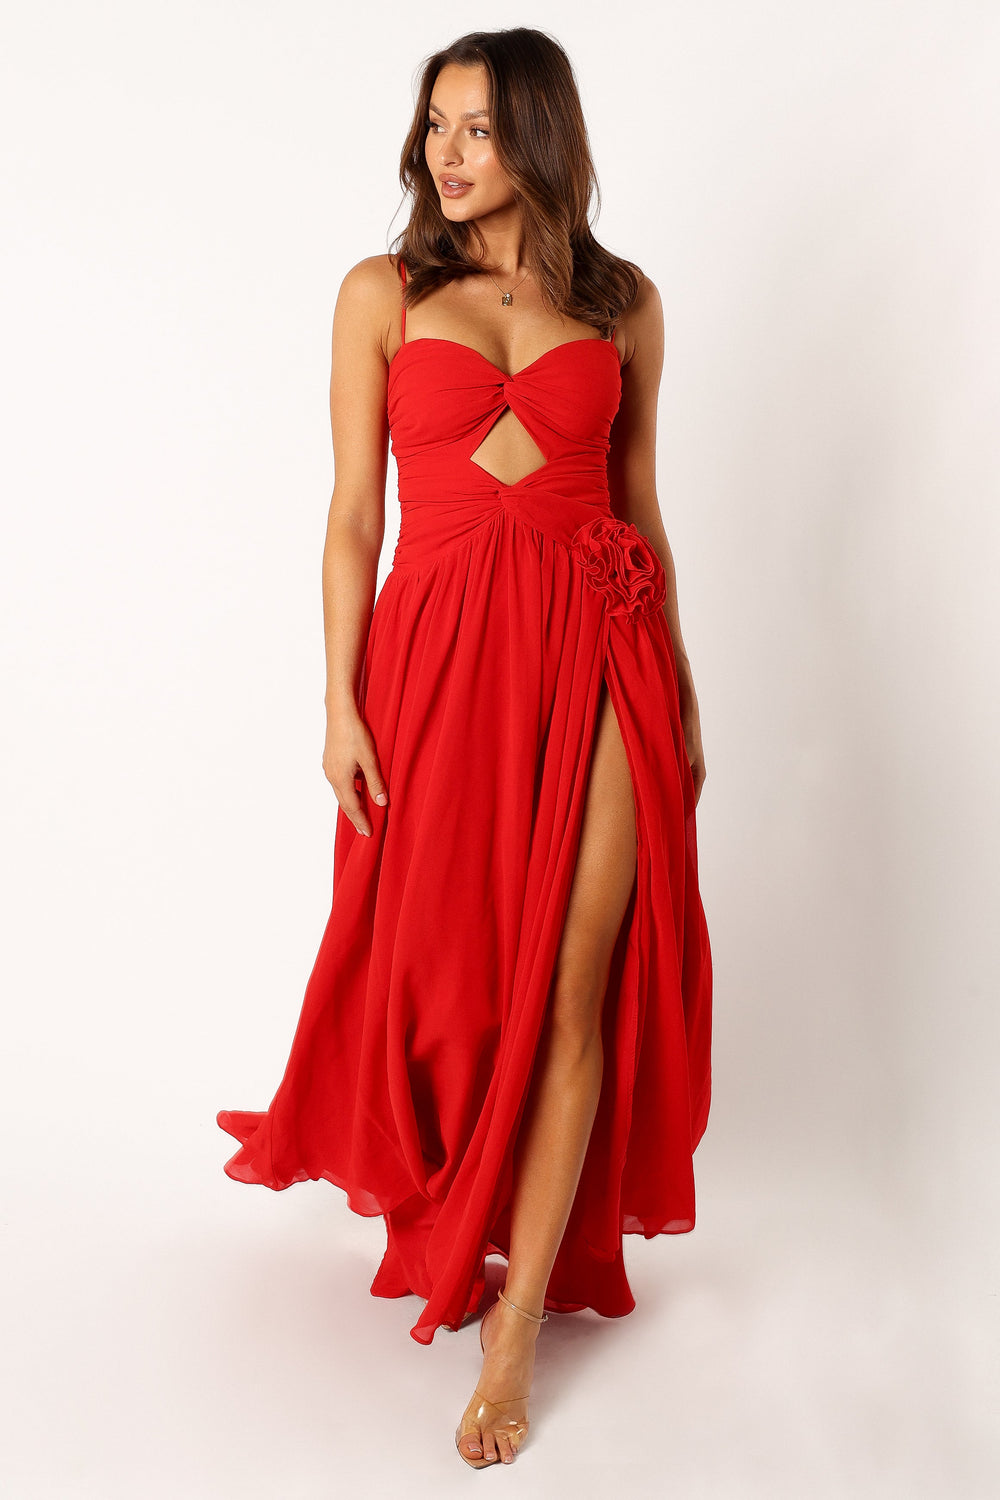 Shop Formal Dress - Danika Maxi Dress - Red third image